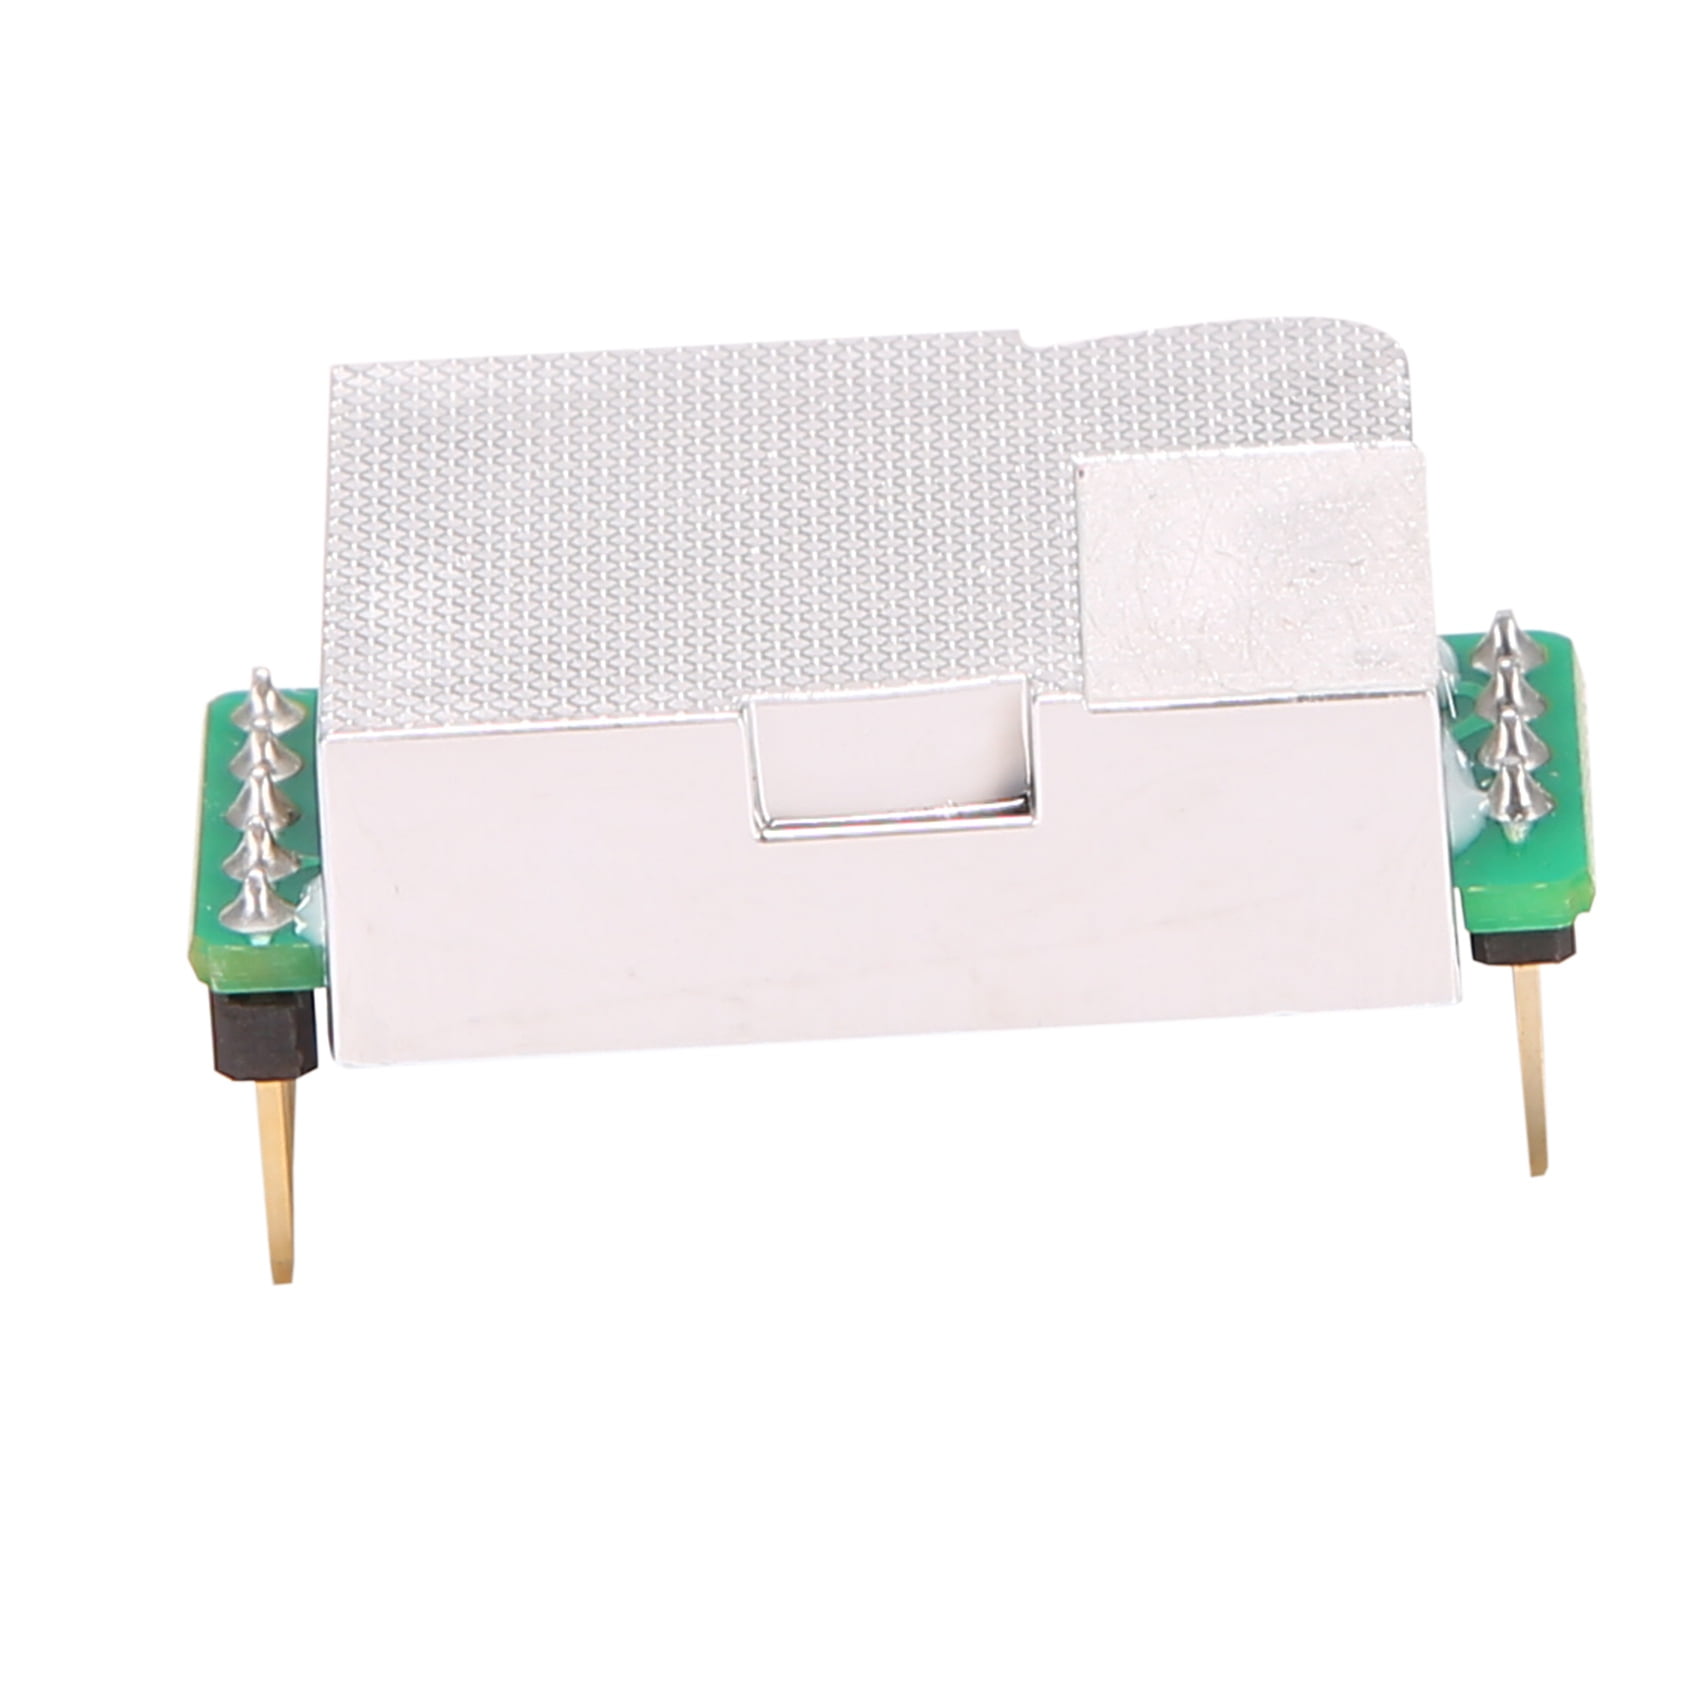 MH-Z19 MH-Z19E IR Infrared CO2 Sensor Module Carbon Dioxide Gas Sensor NDIR  for CO2 Monitor 400-5000Ppm UART PWM(A)